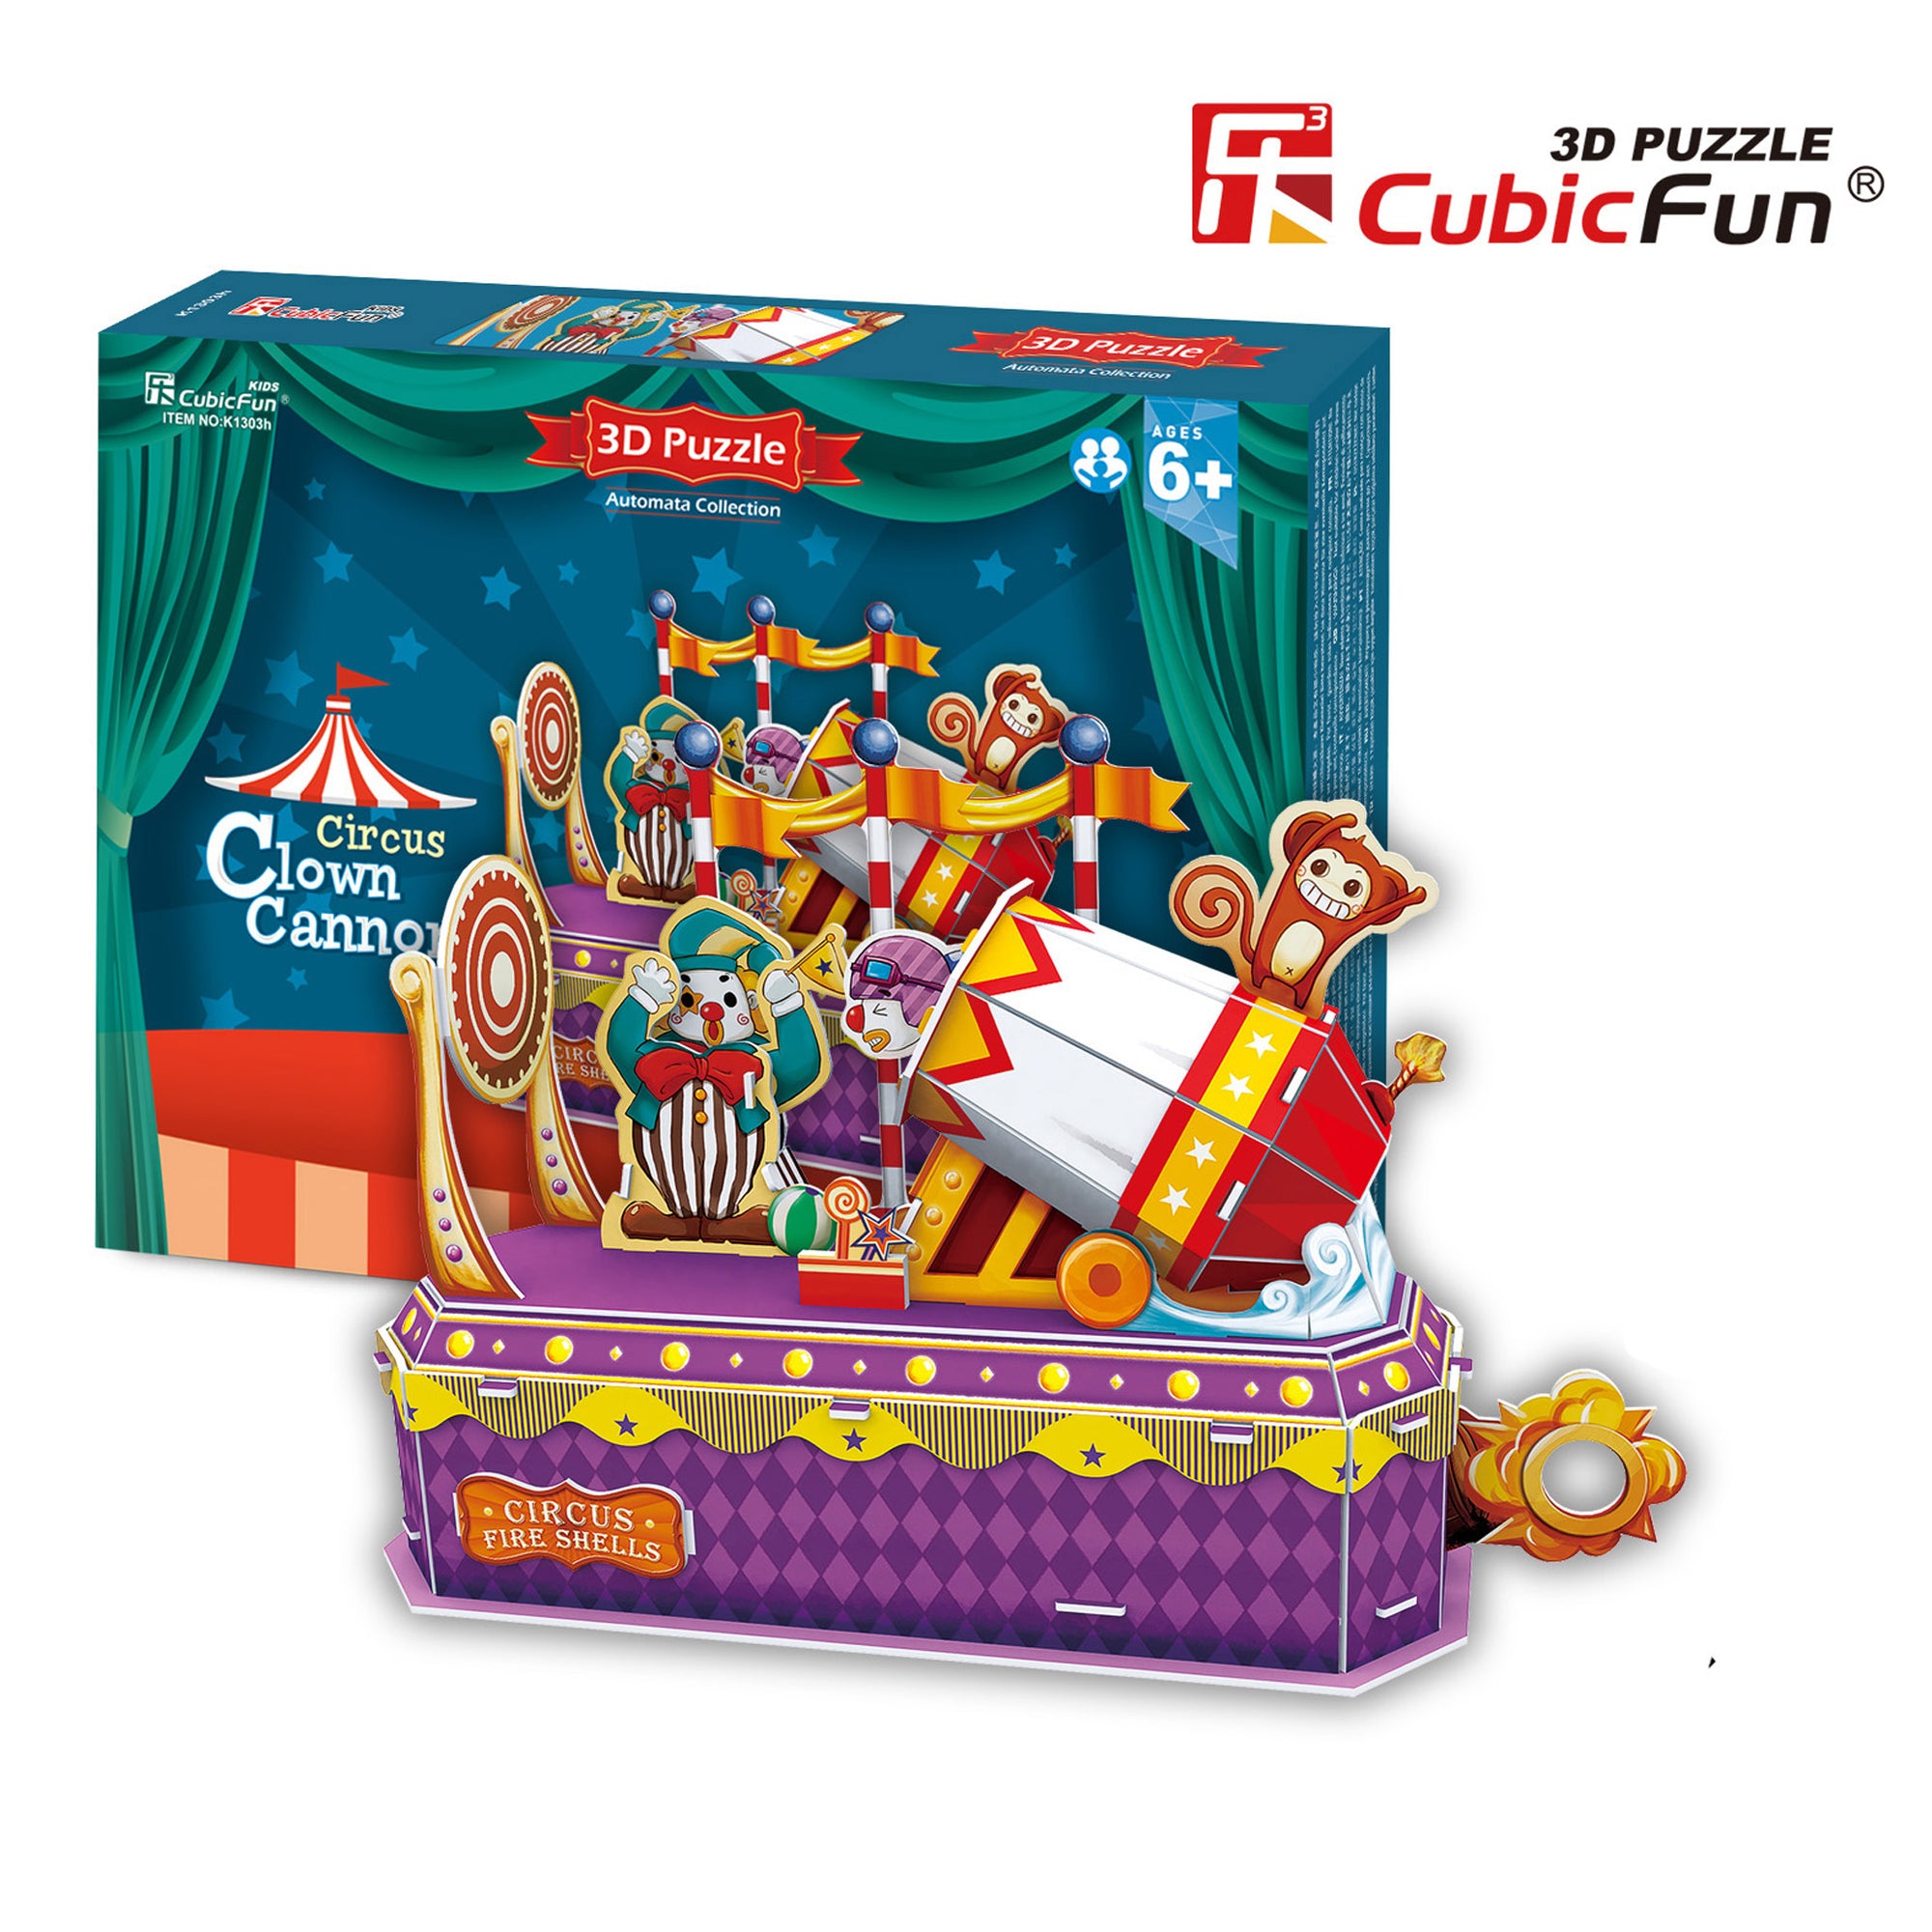 Circus - Clown Cannon, 3D Puzzle